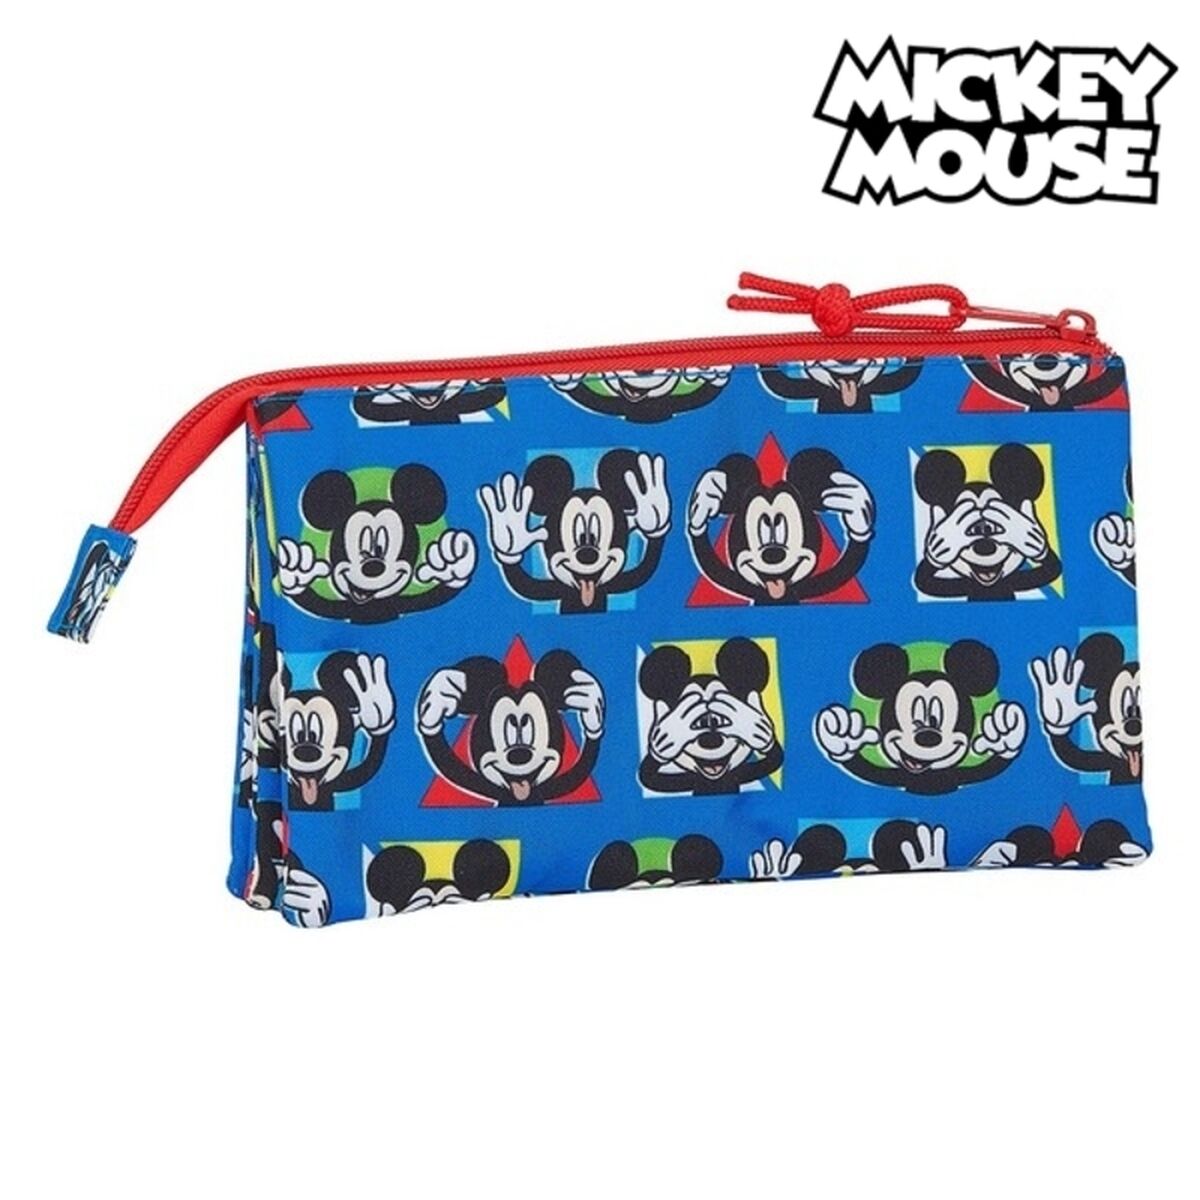 Dreifaches Mehrzweck-Etui Mickey Mouse Me time Rot Blau 22 x 12 x 3 cm